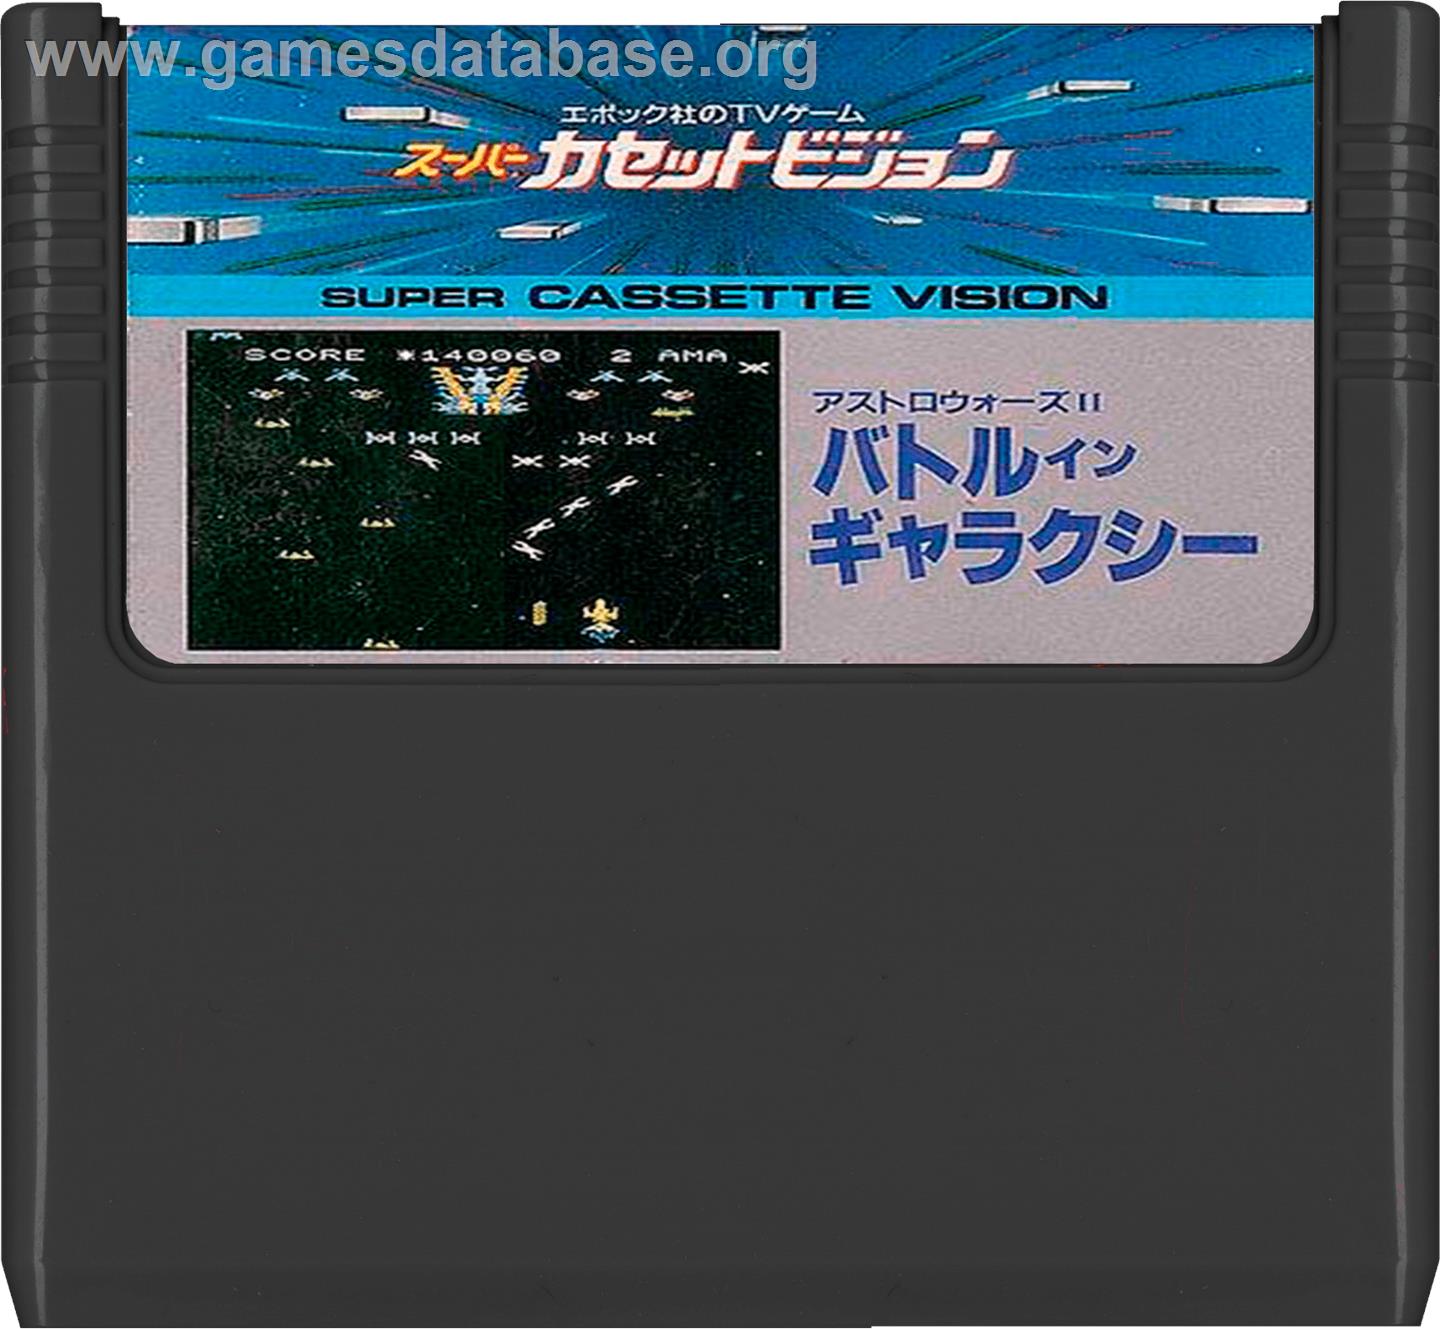 Astro Wars II - Battle in Galaxy - Epoch Super Cassette Vision - Artwork - Cartridge